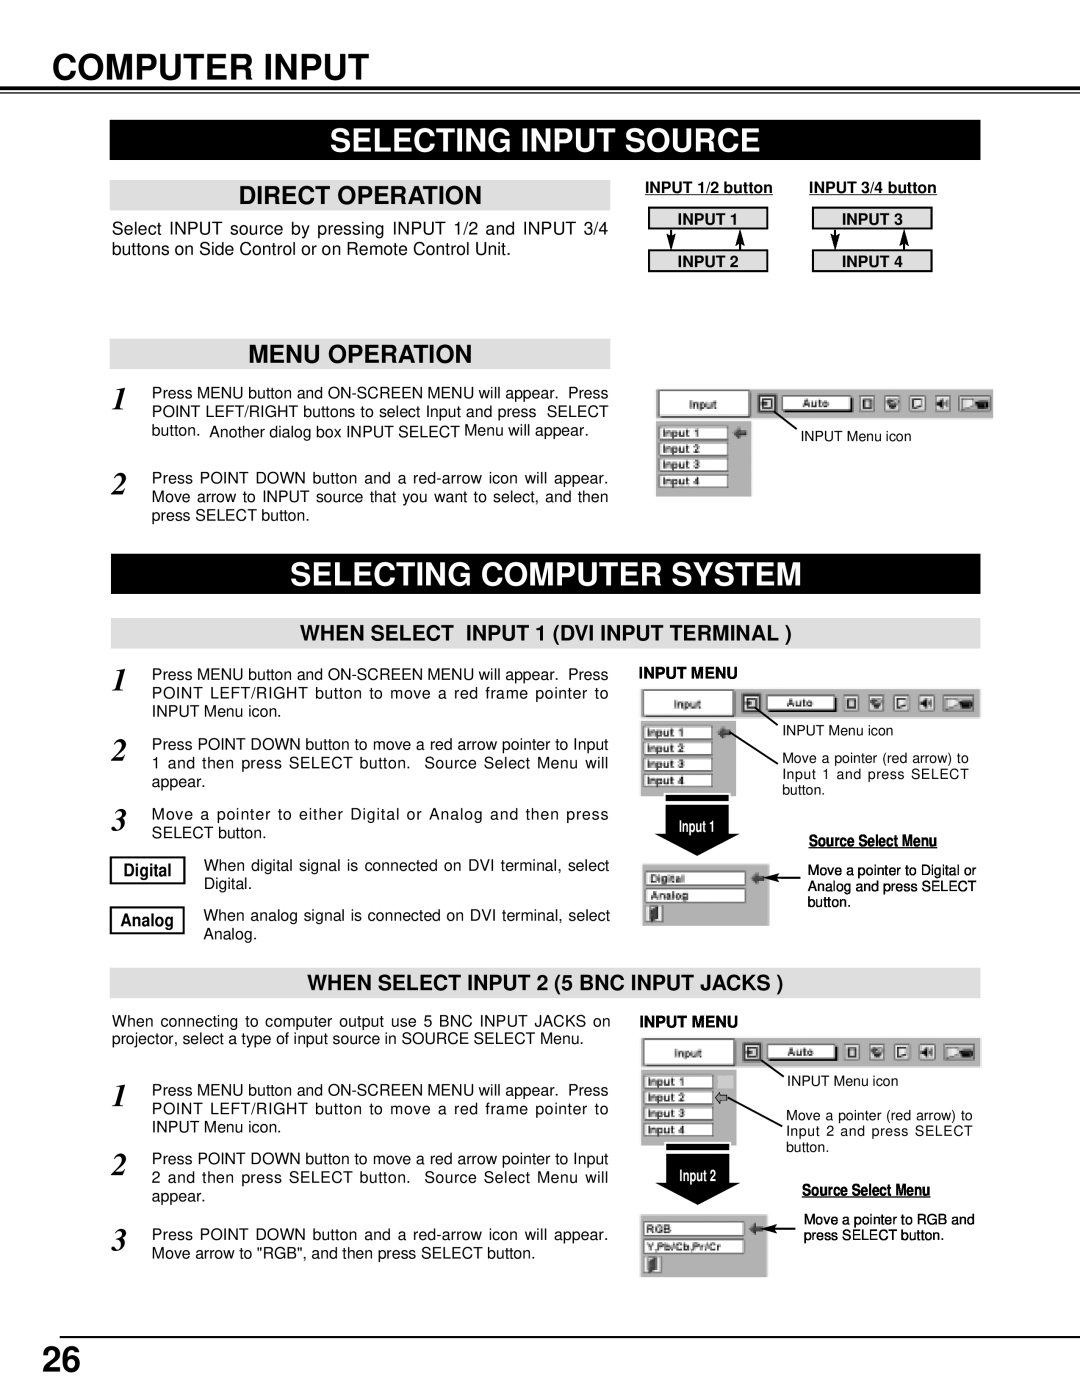 Eiki LC-XT2 instruction manual Computer Input, Selecting Input Source, Selecting Computer System 